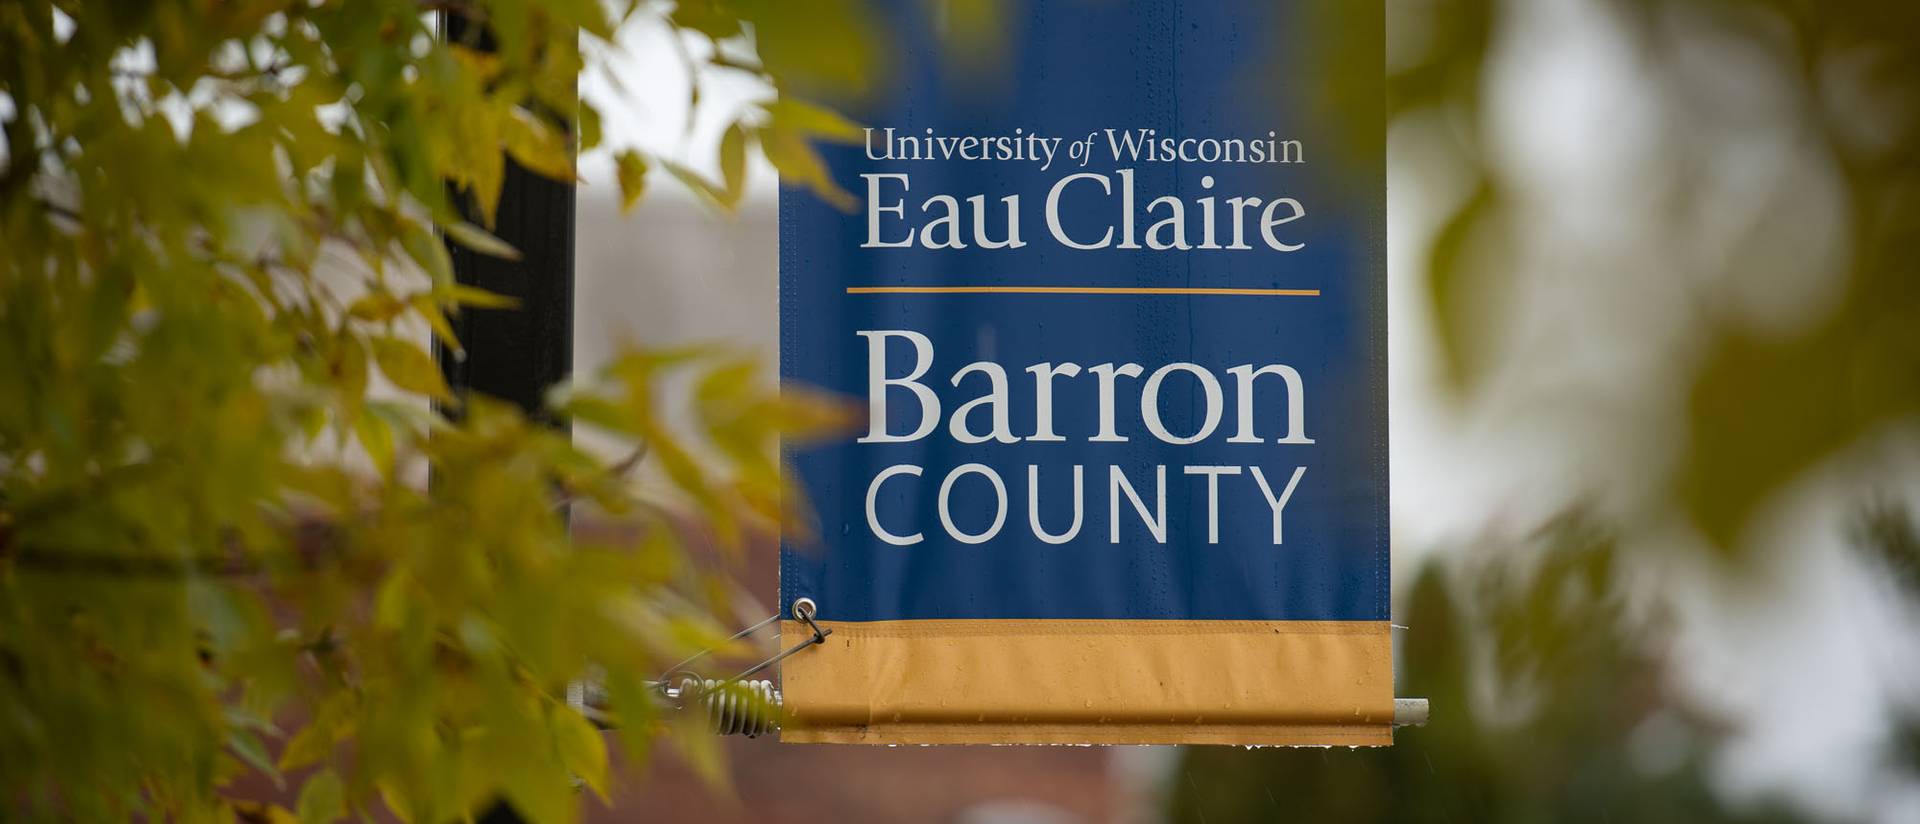 UW-Eau Claire – Barron County image